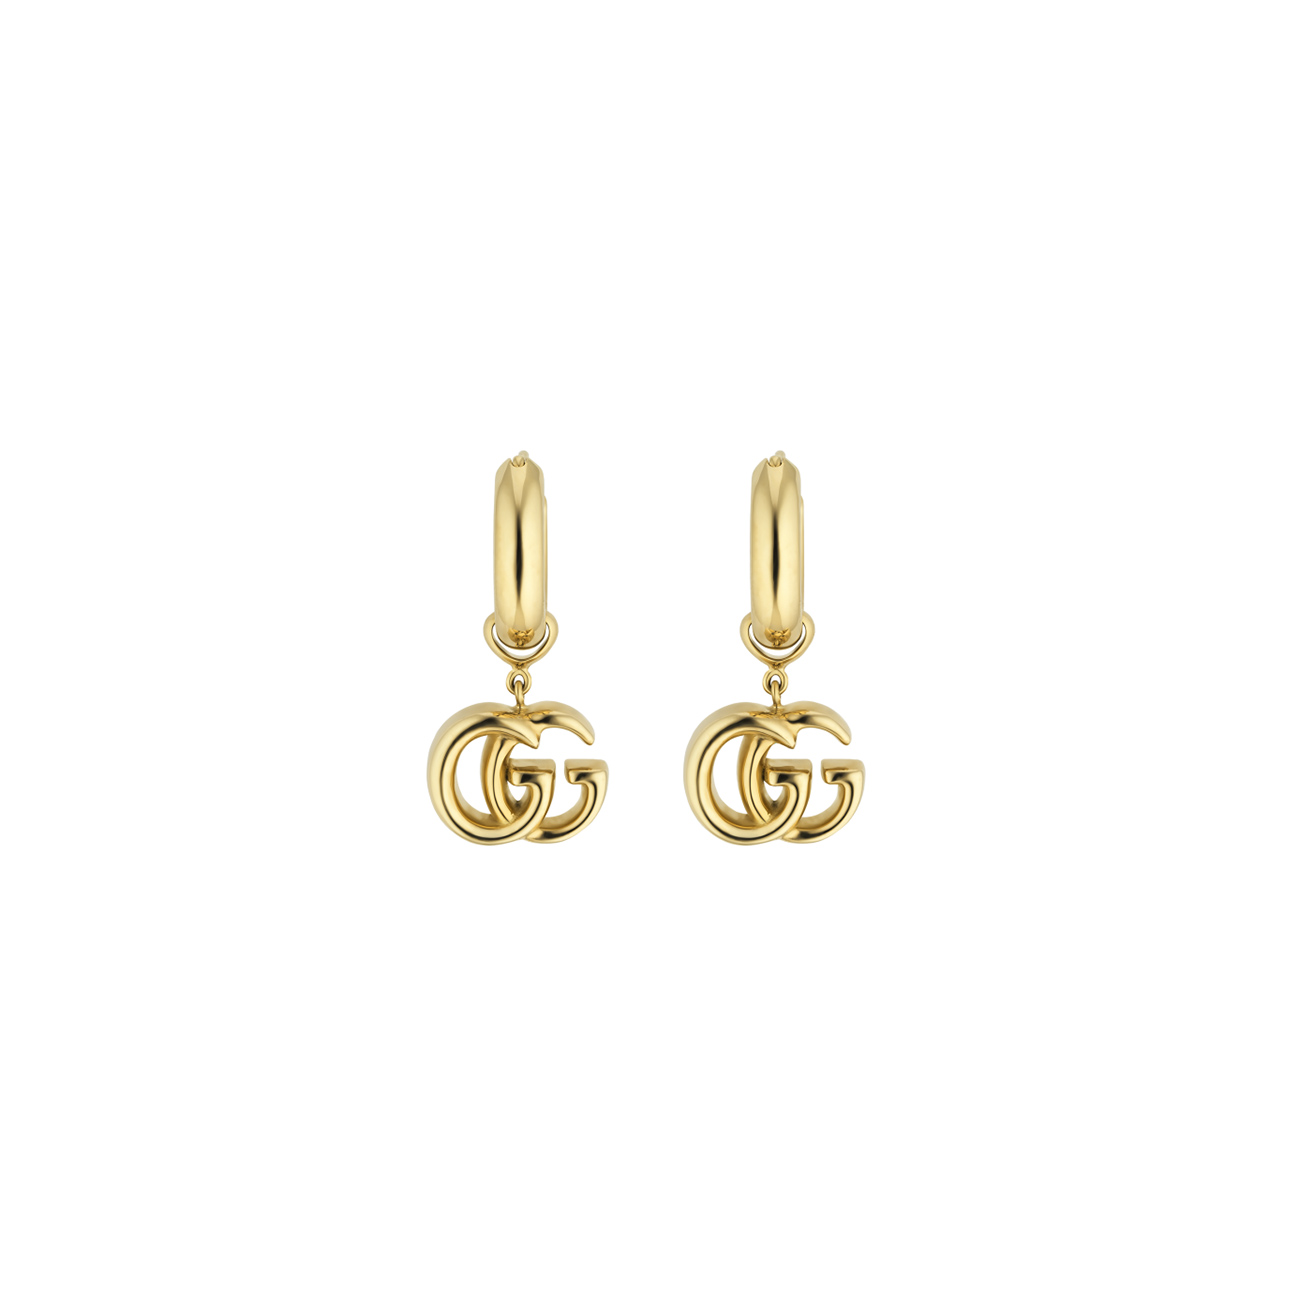 Gucci GG Running Earrings in 18k Yellow Gold